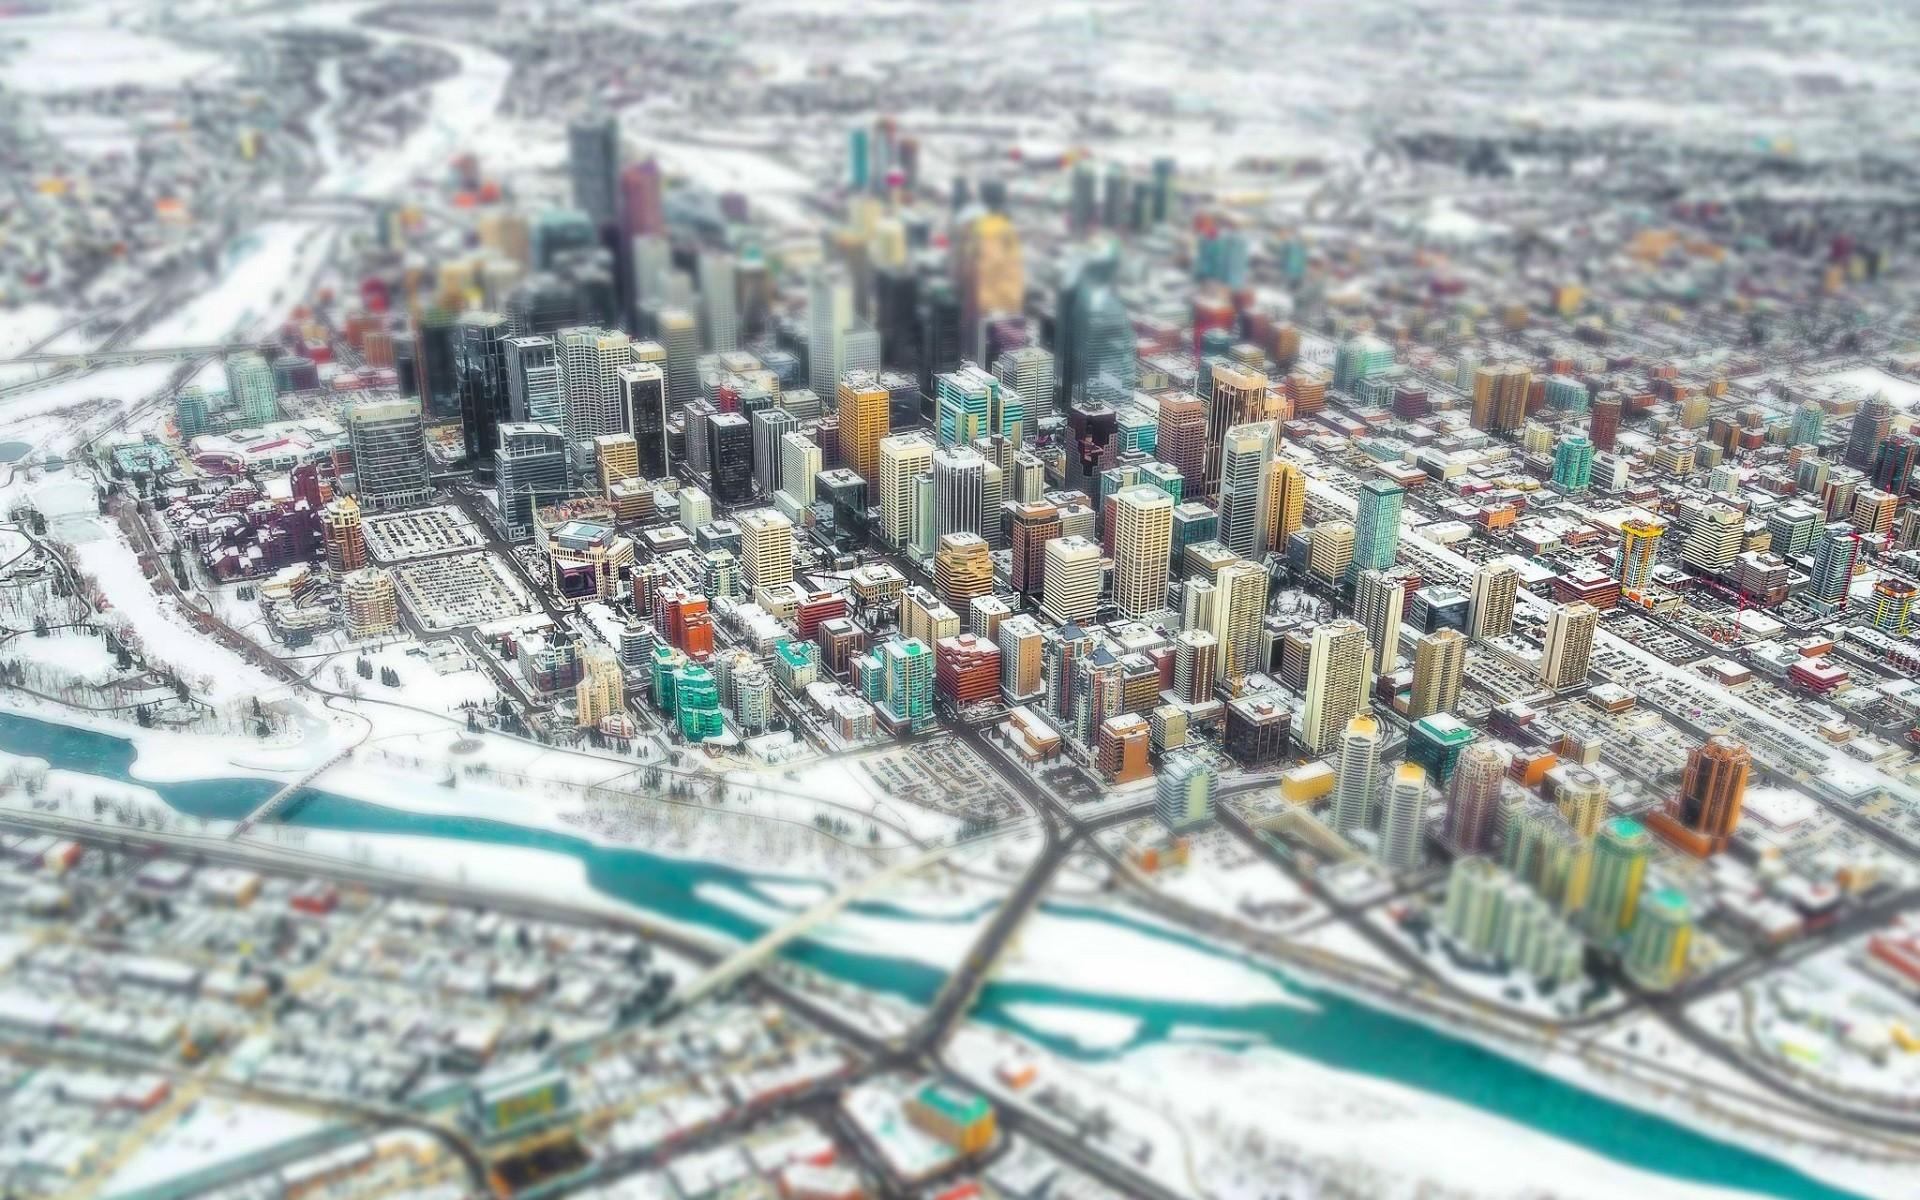 Canada, #building, #winter, #urban, #snow, #Calgary, #river